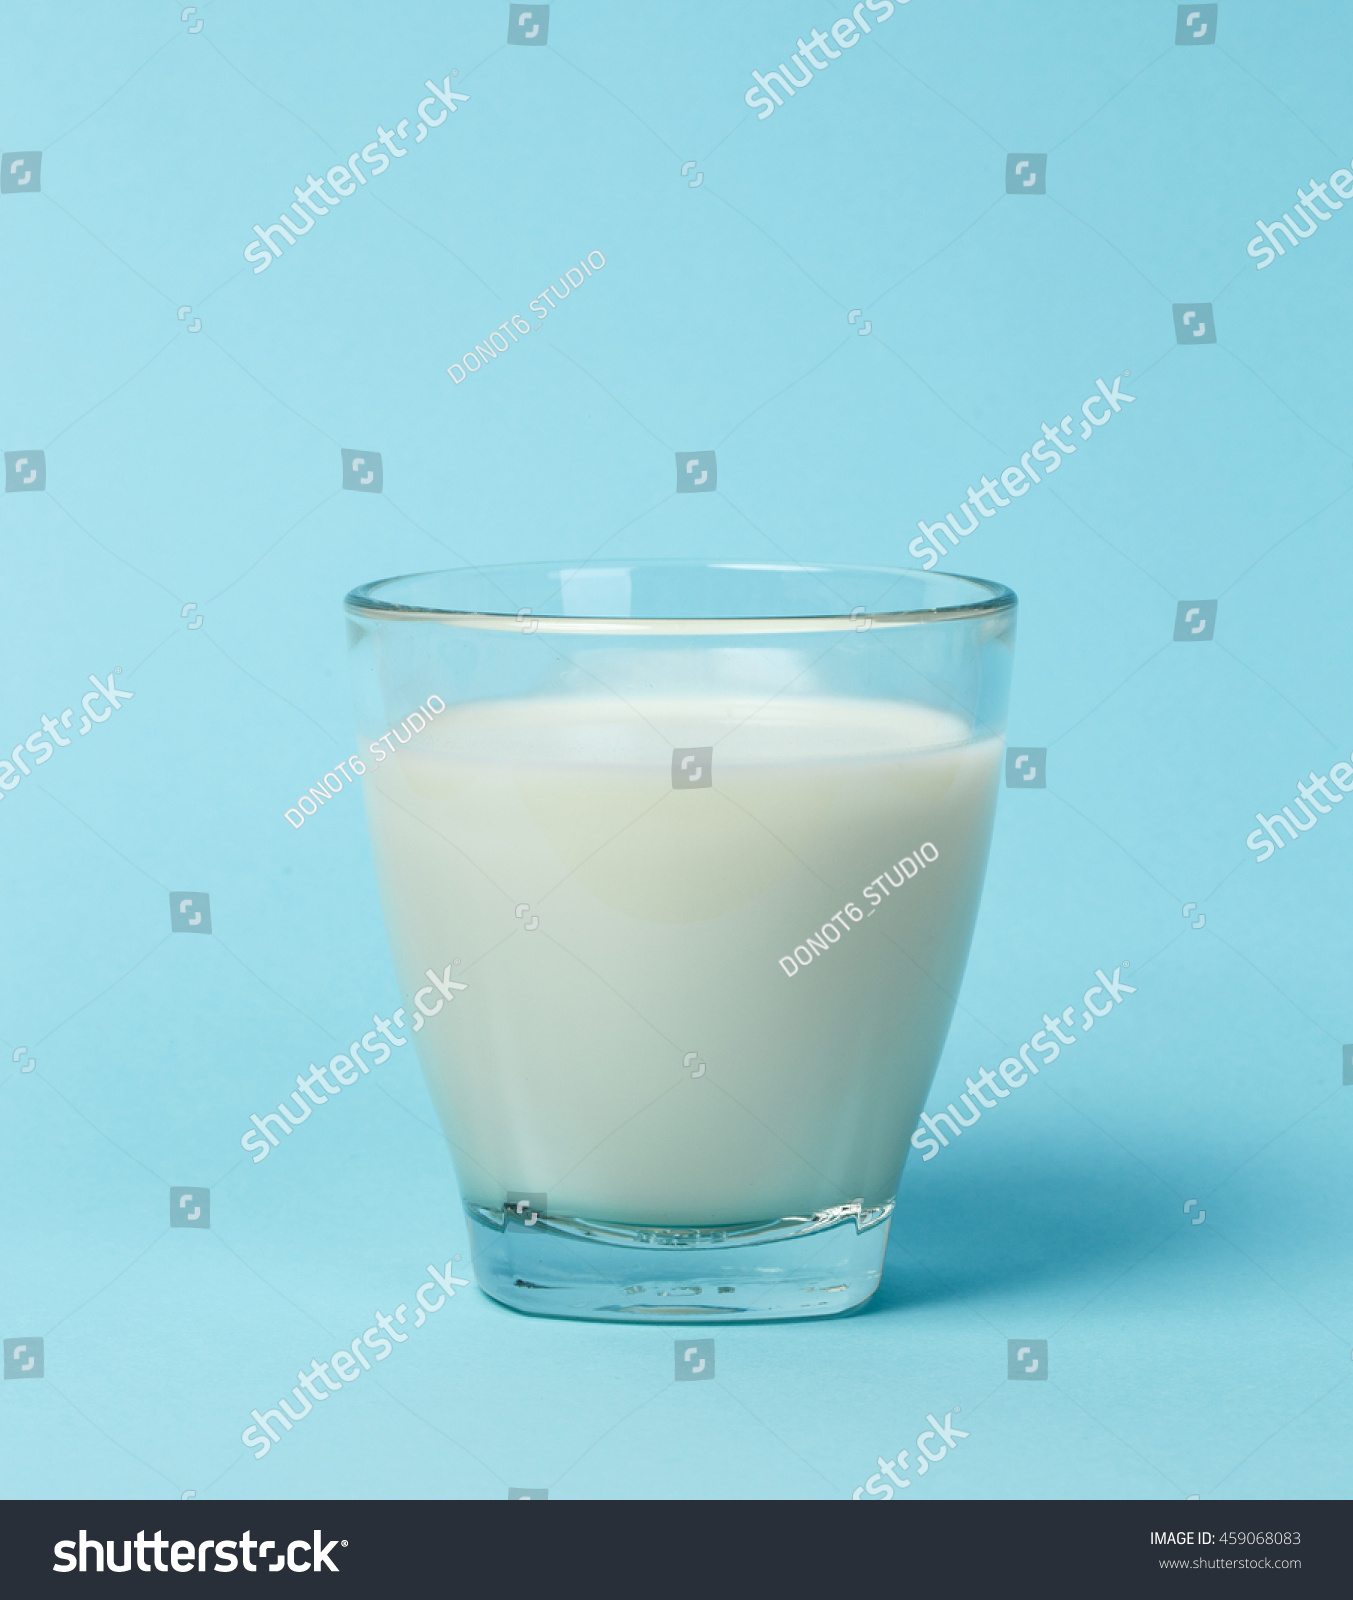 Milk glass over blue background #459068083